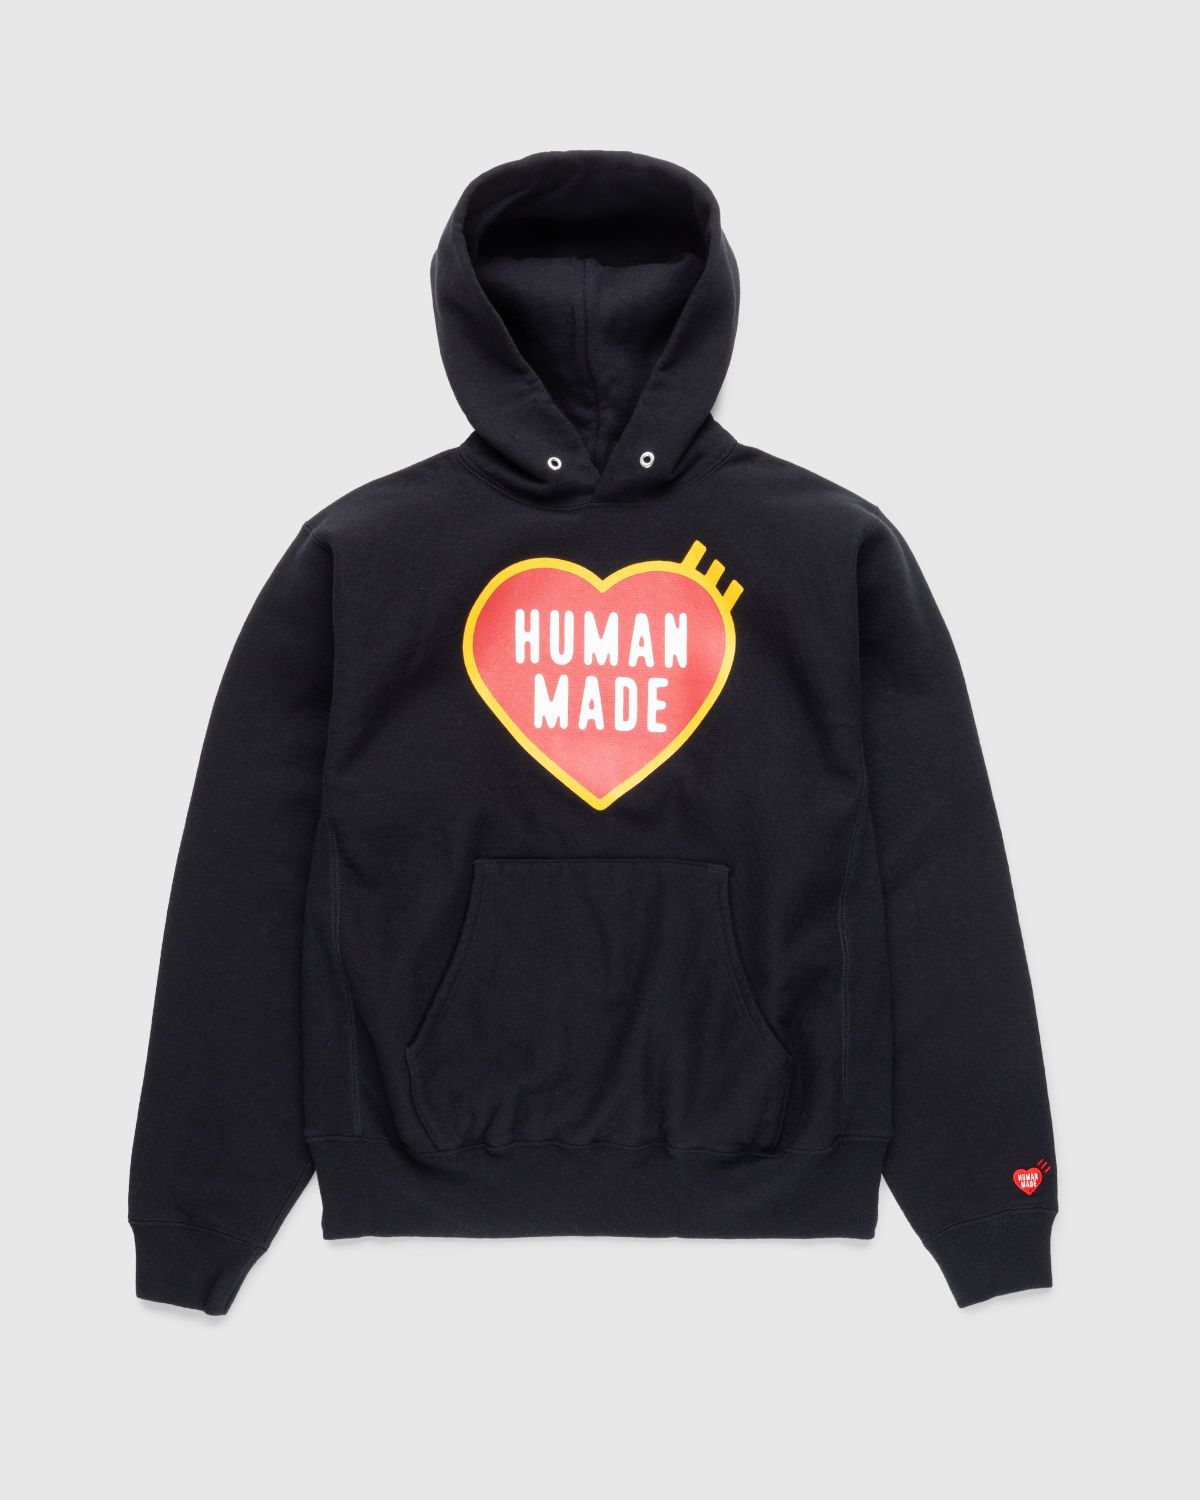 Human Made – Heart Logo Hoodie Black | Highsnobiety Shop